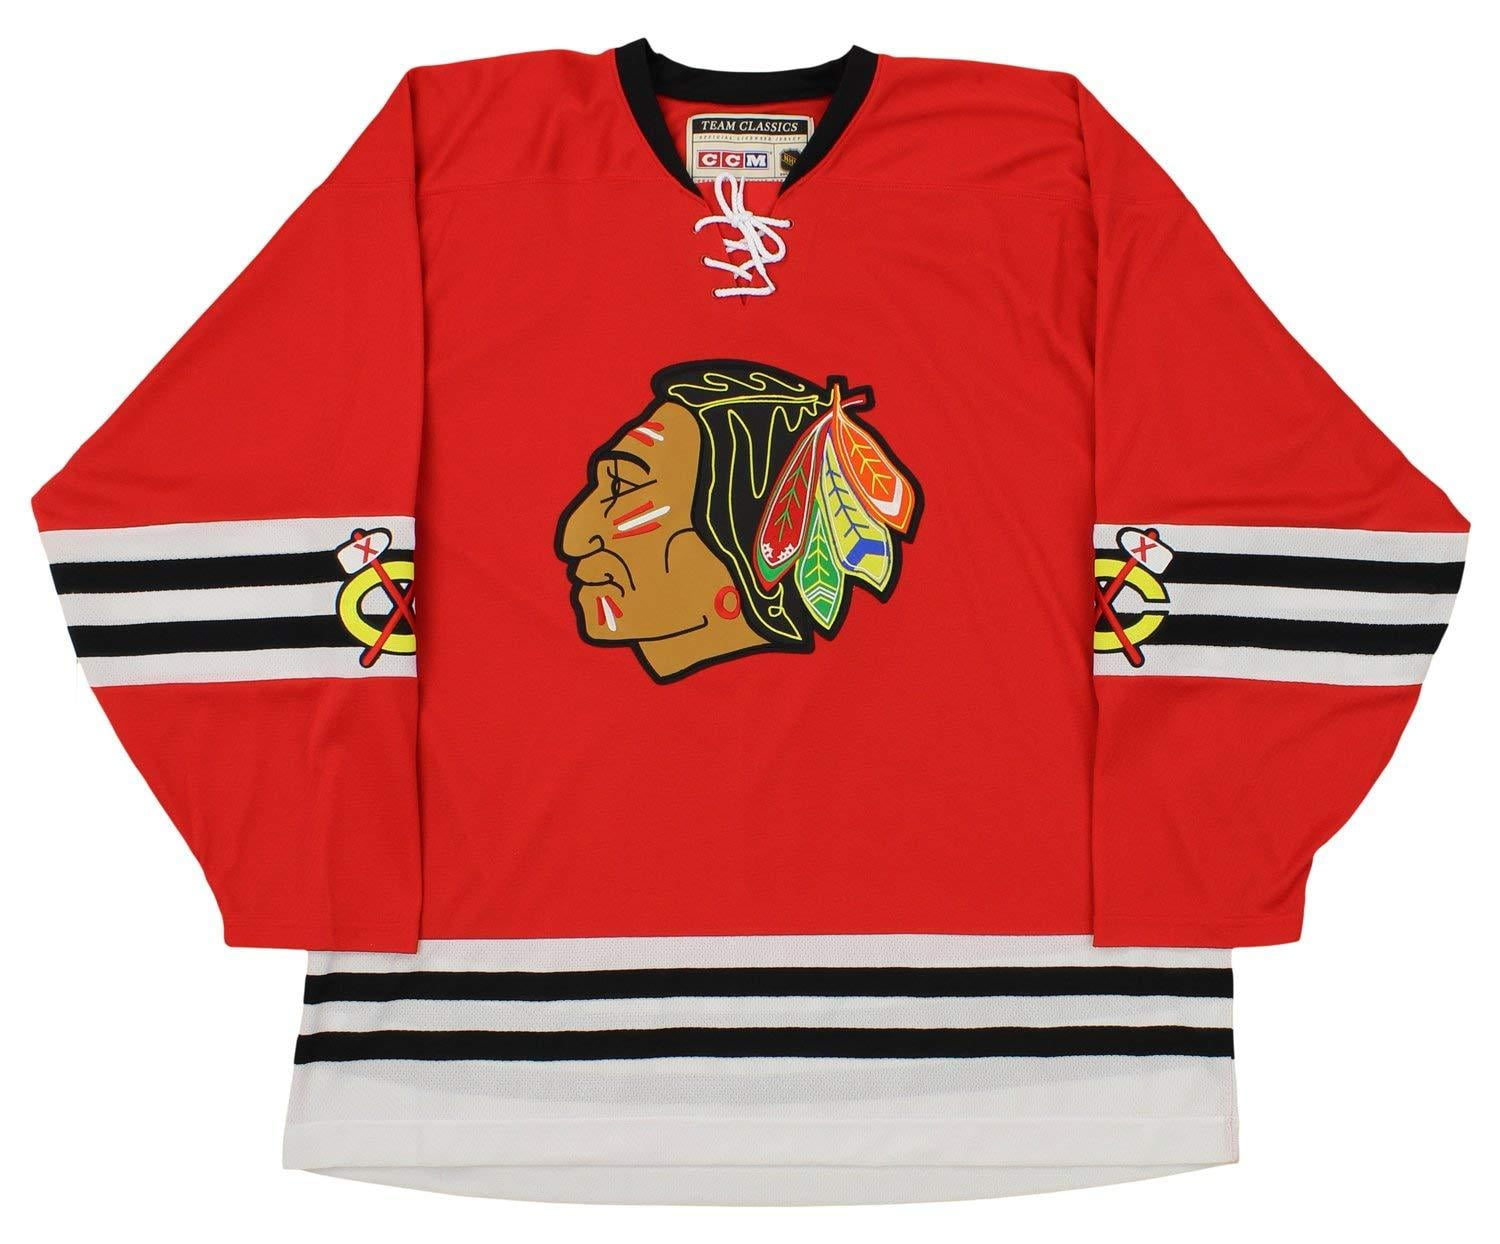 chicago blackhawks jersey